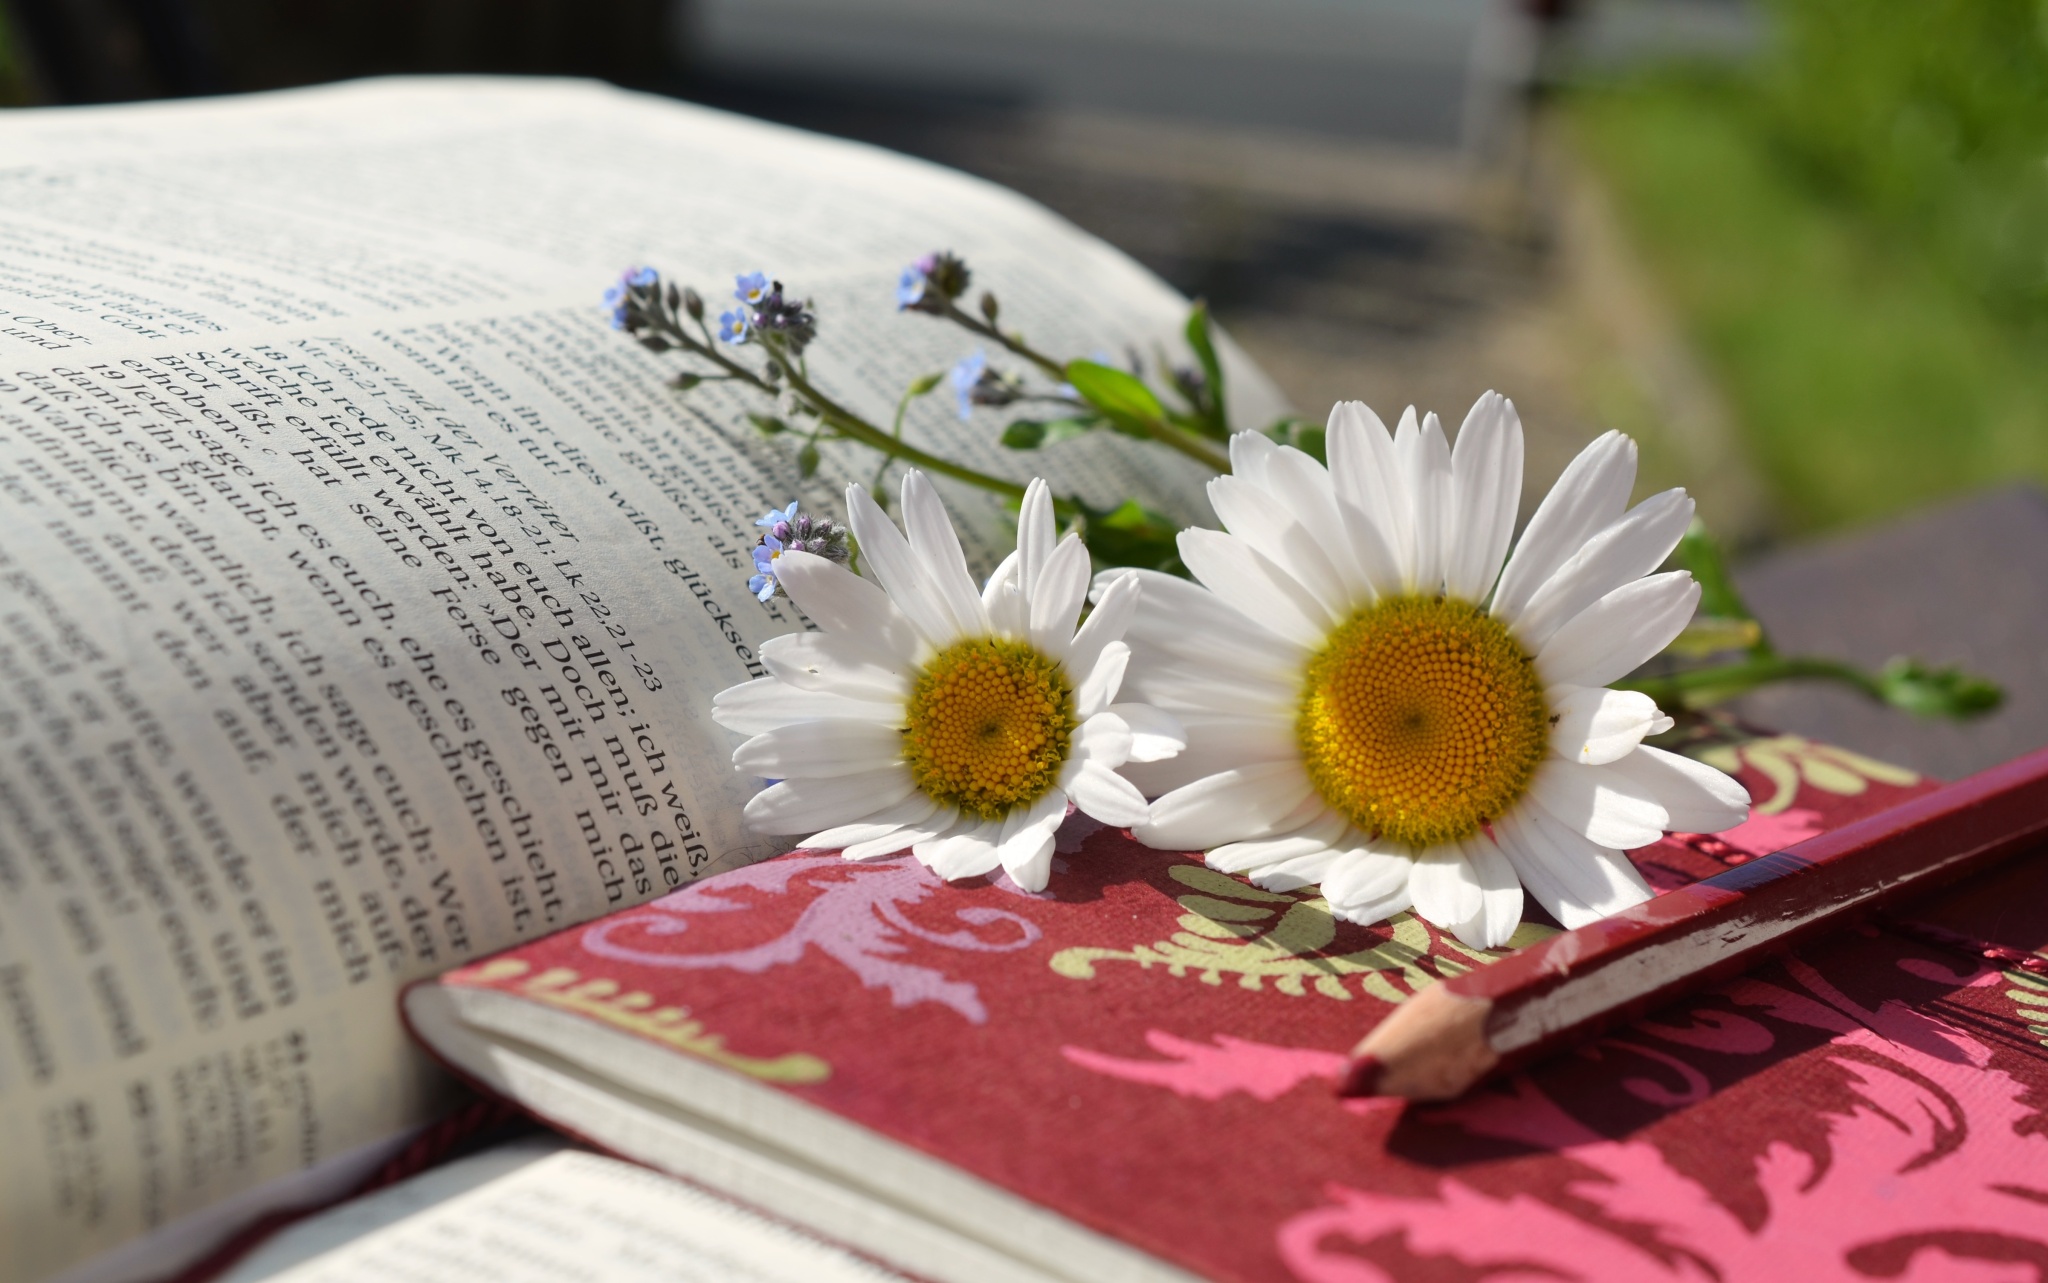 book-read-plant-flower-petal-relax-1233304-pxhere.com.jpg